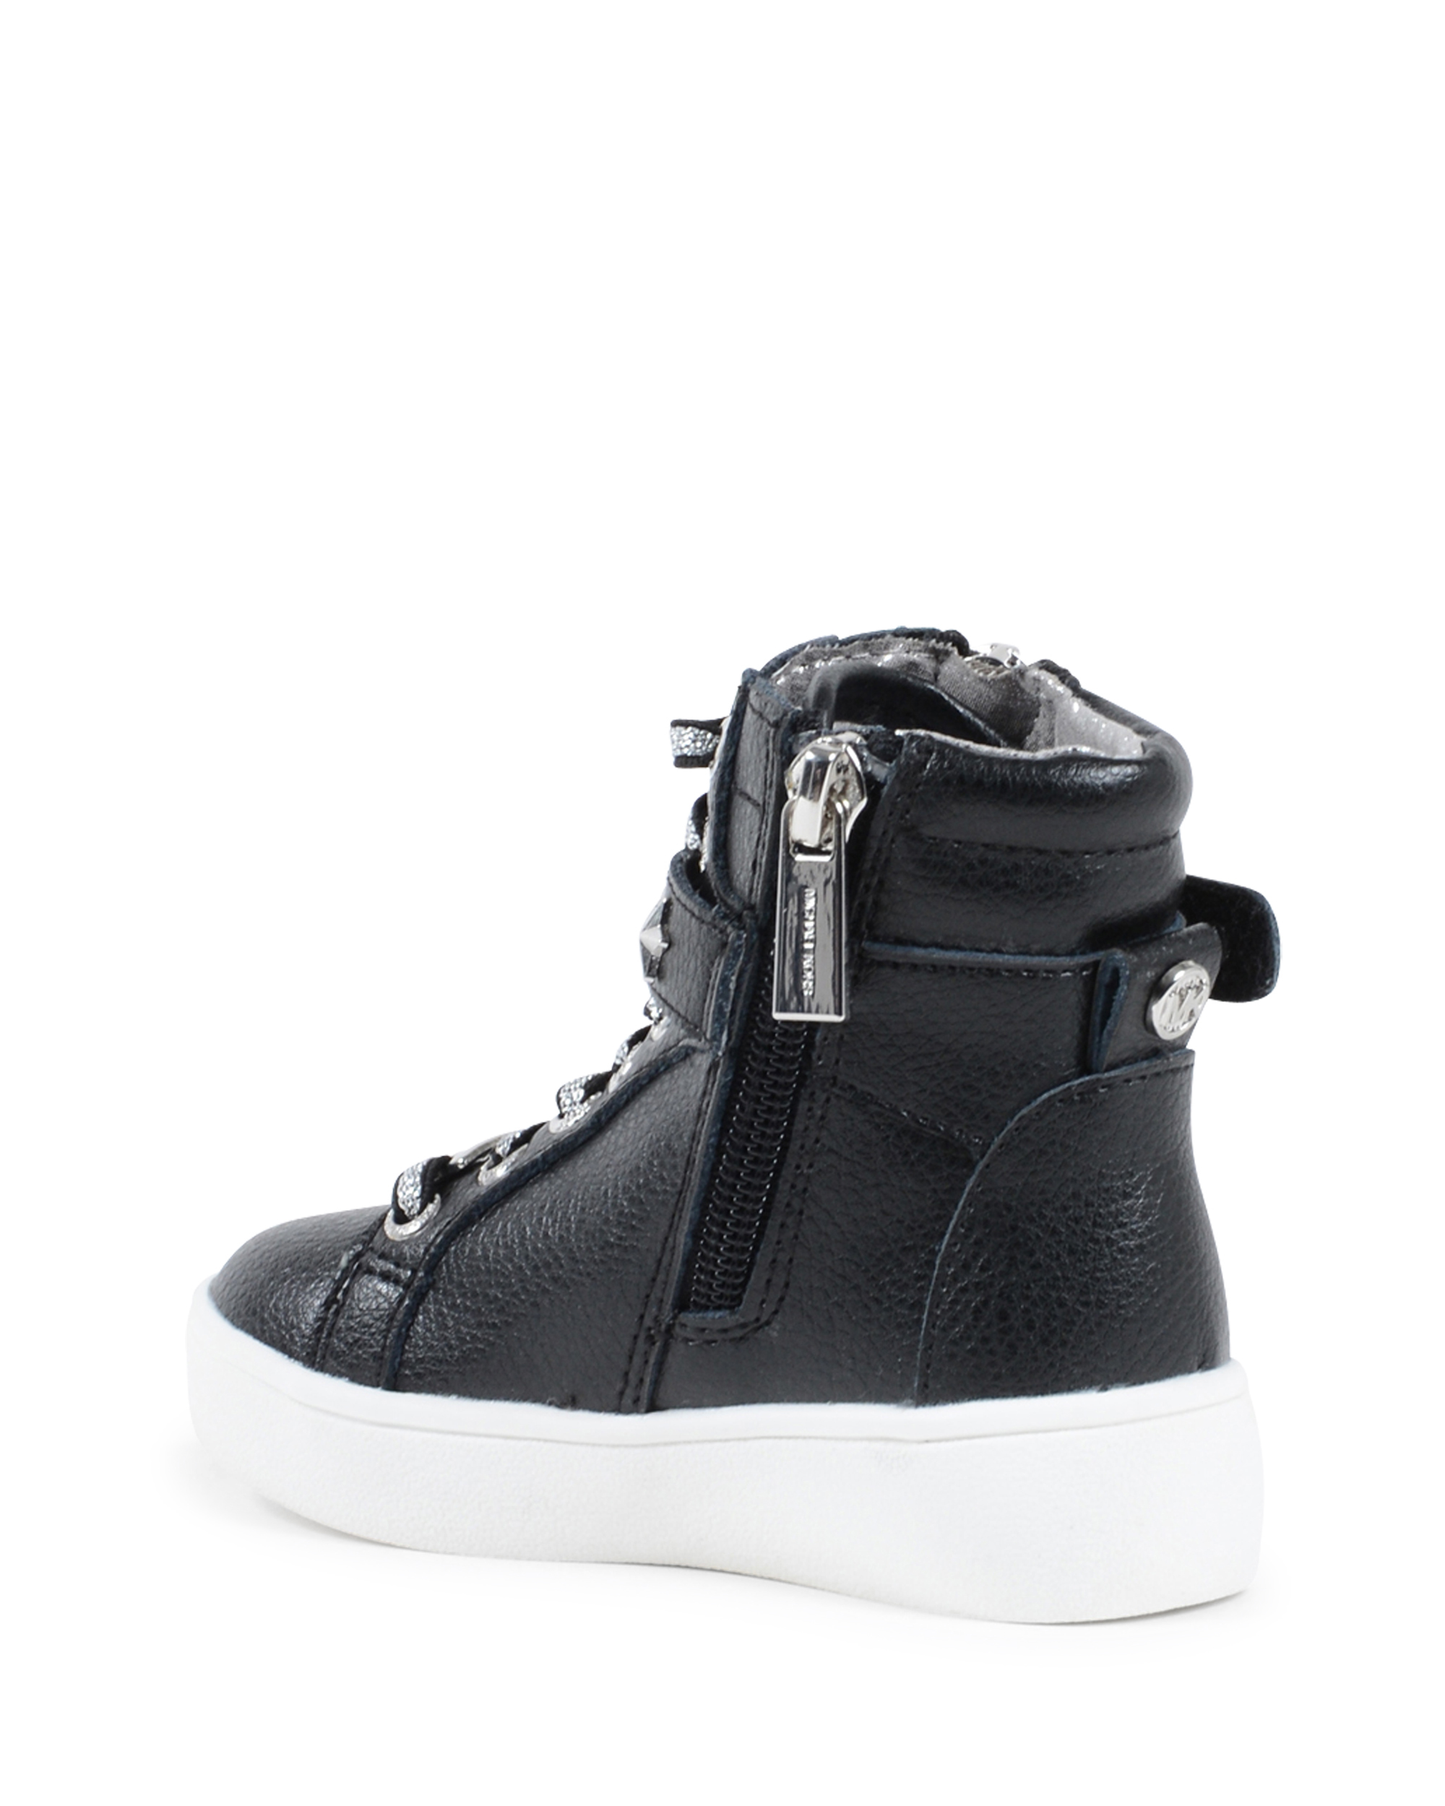 Michael Kors Girls High Sneaker Black ZIA IVY CADETT BLACK